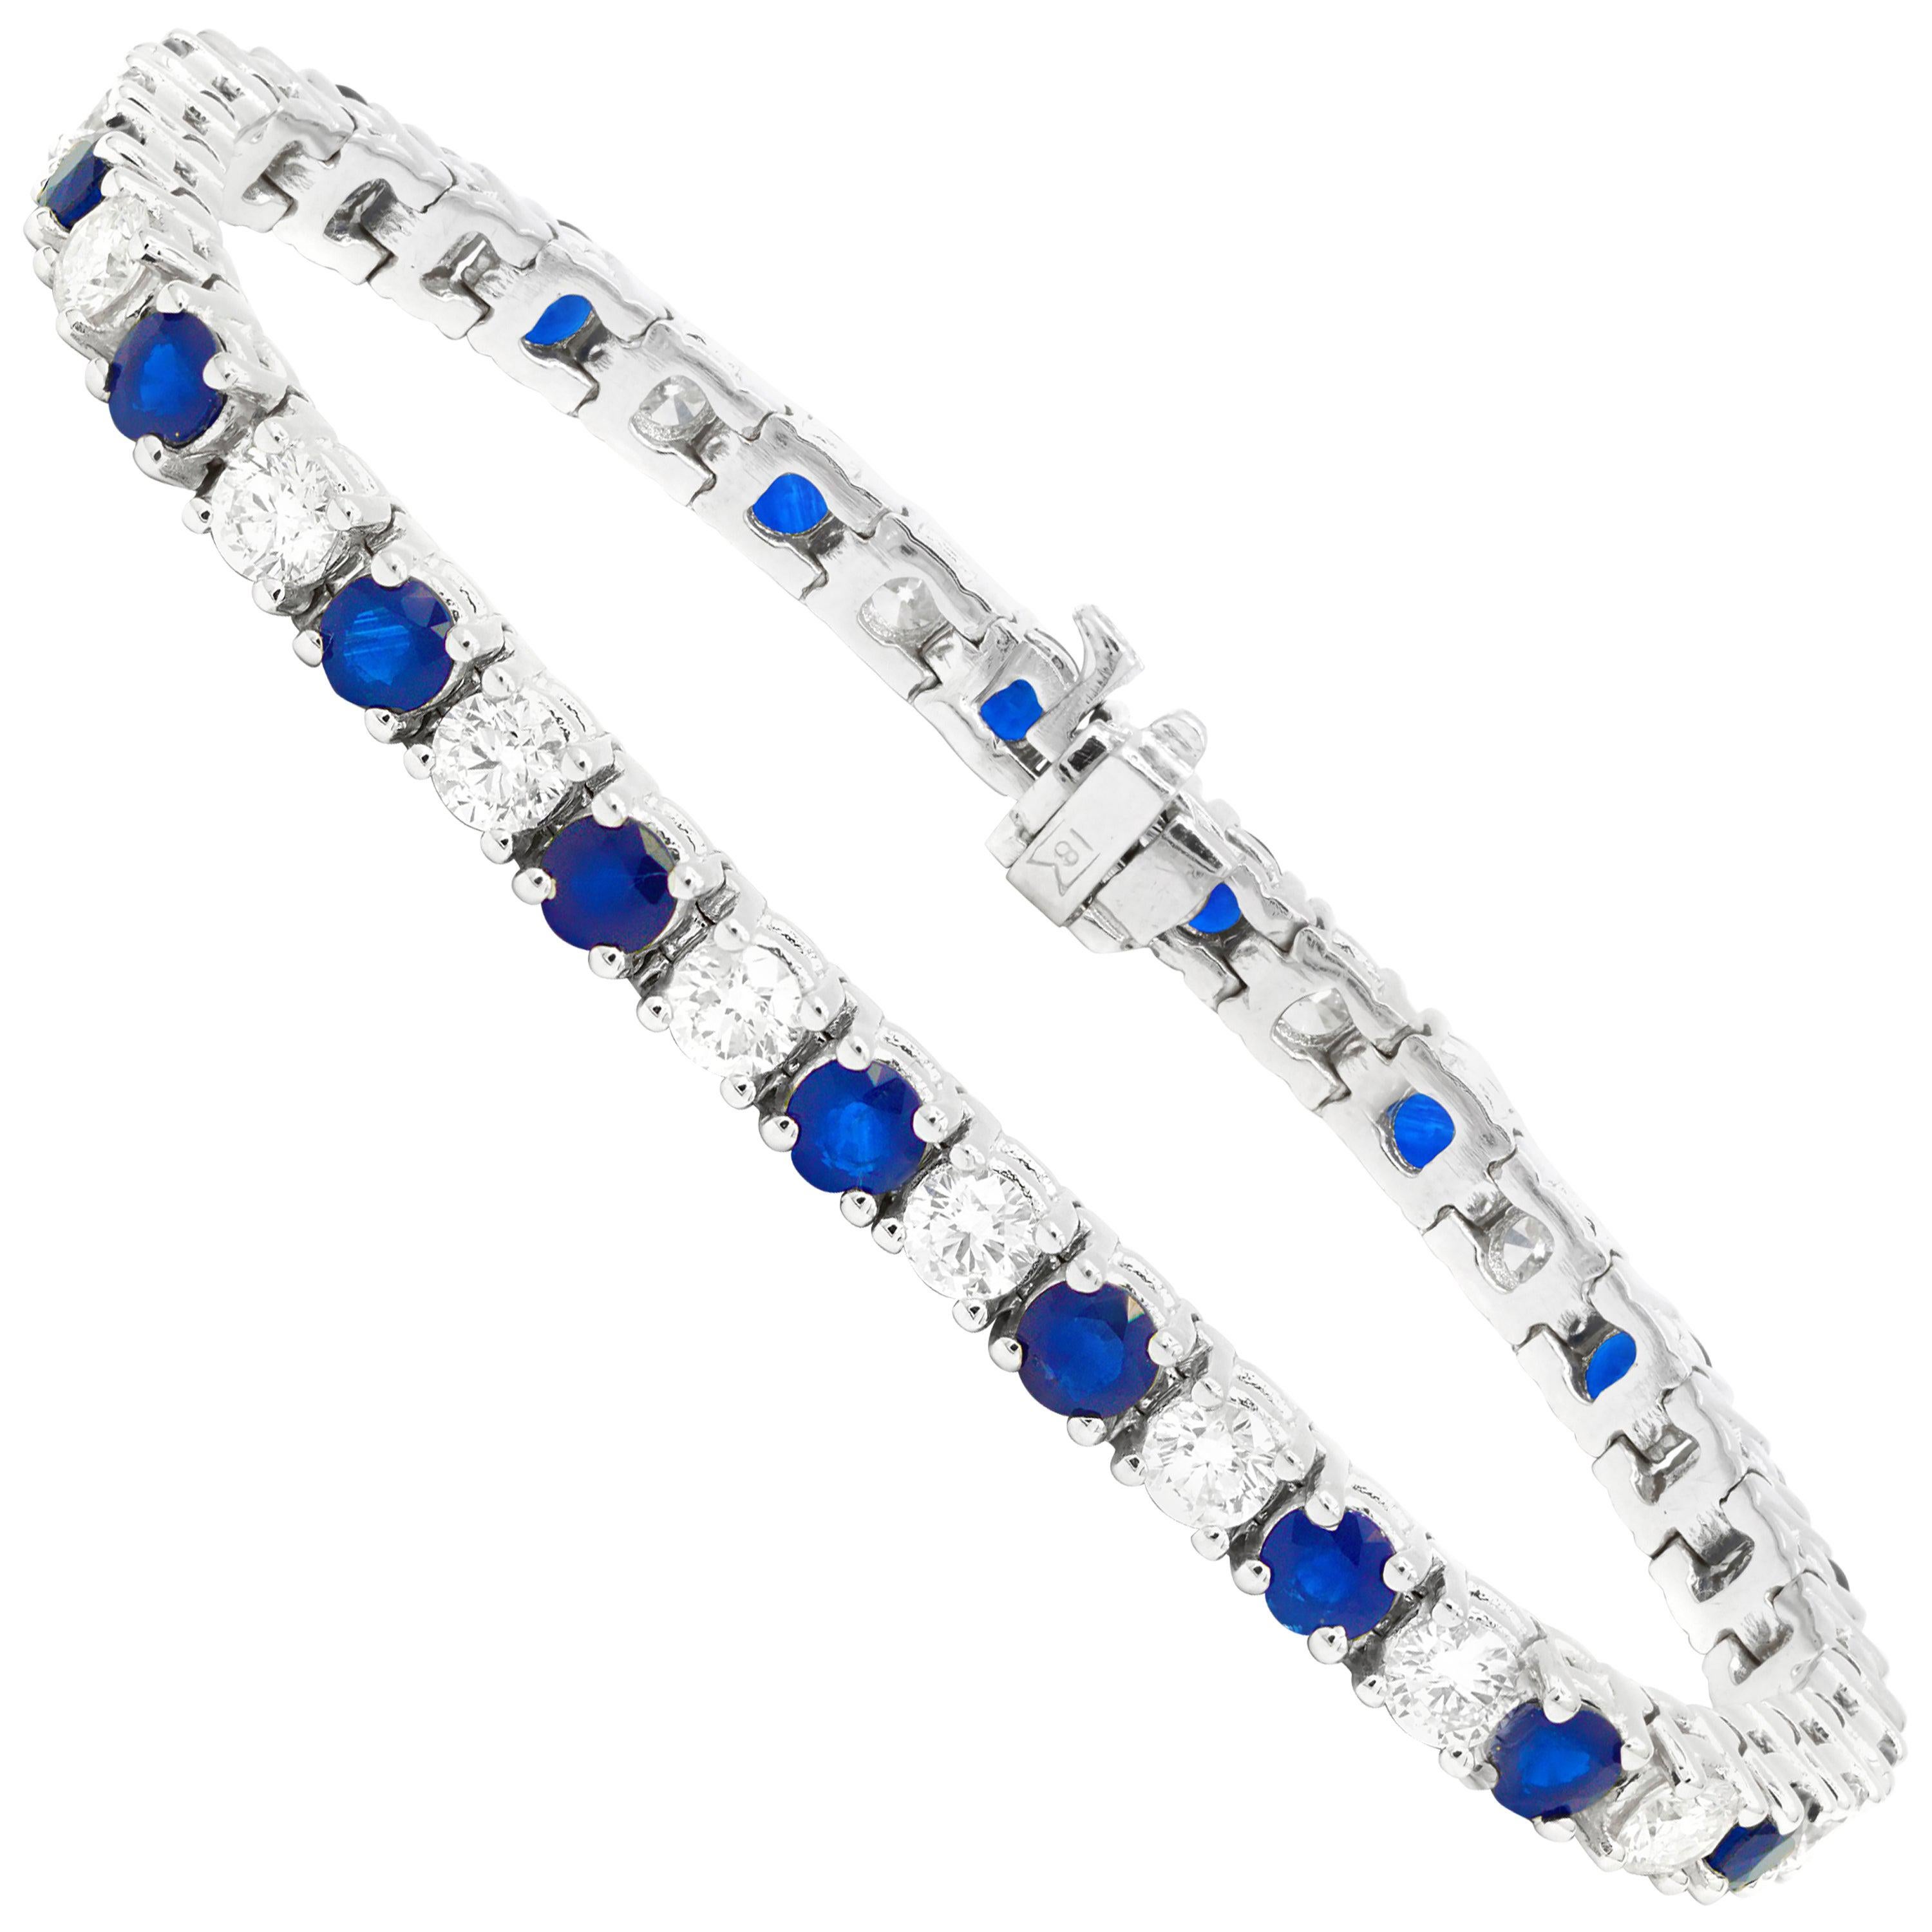 Tennis Bracelet with 7.36 Carat of Blue Sapphires and 4.15 Carat of Diamonds